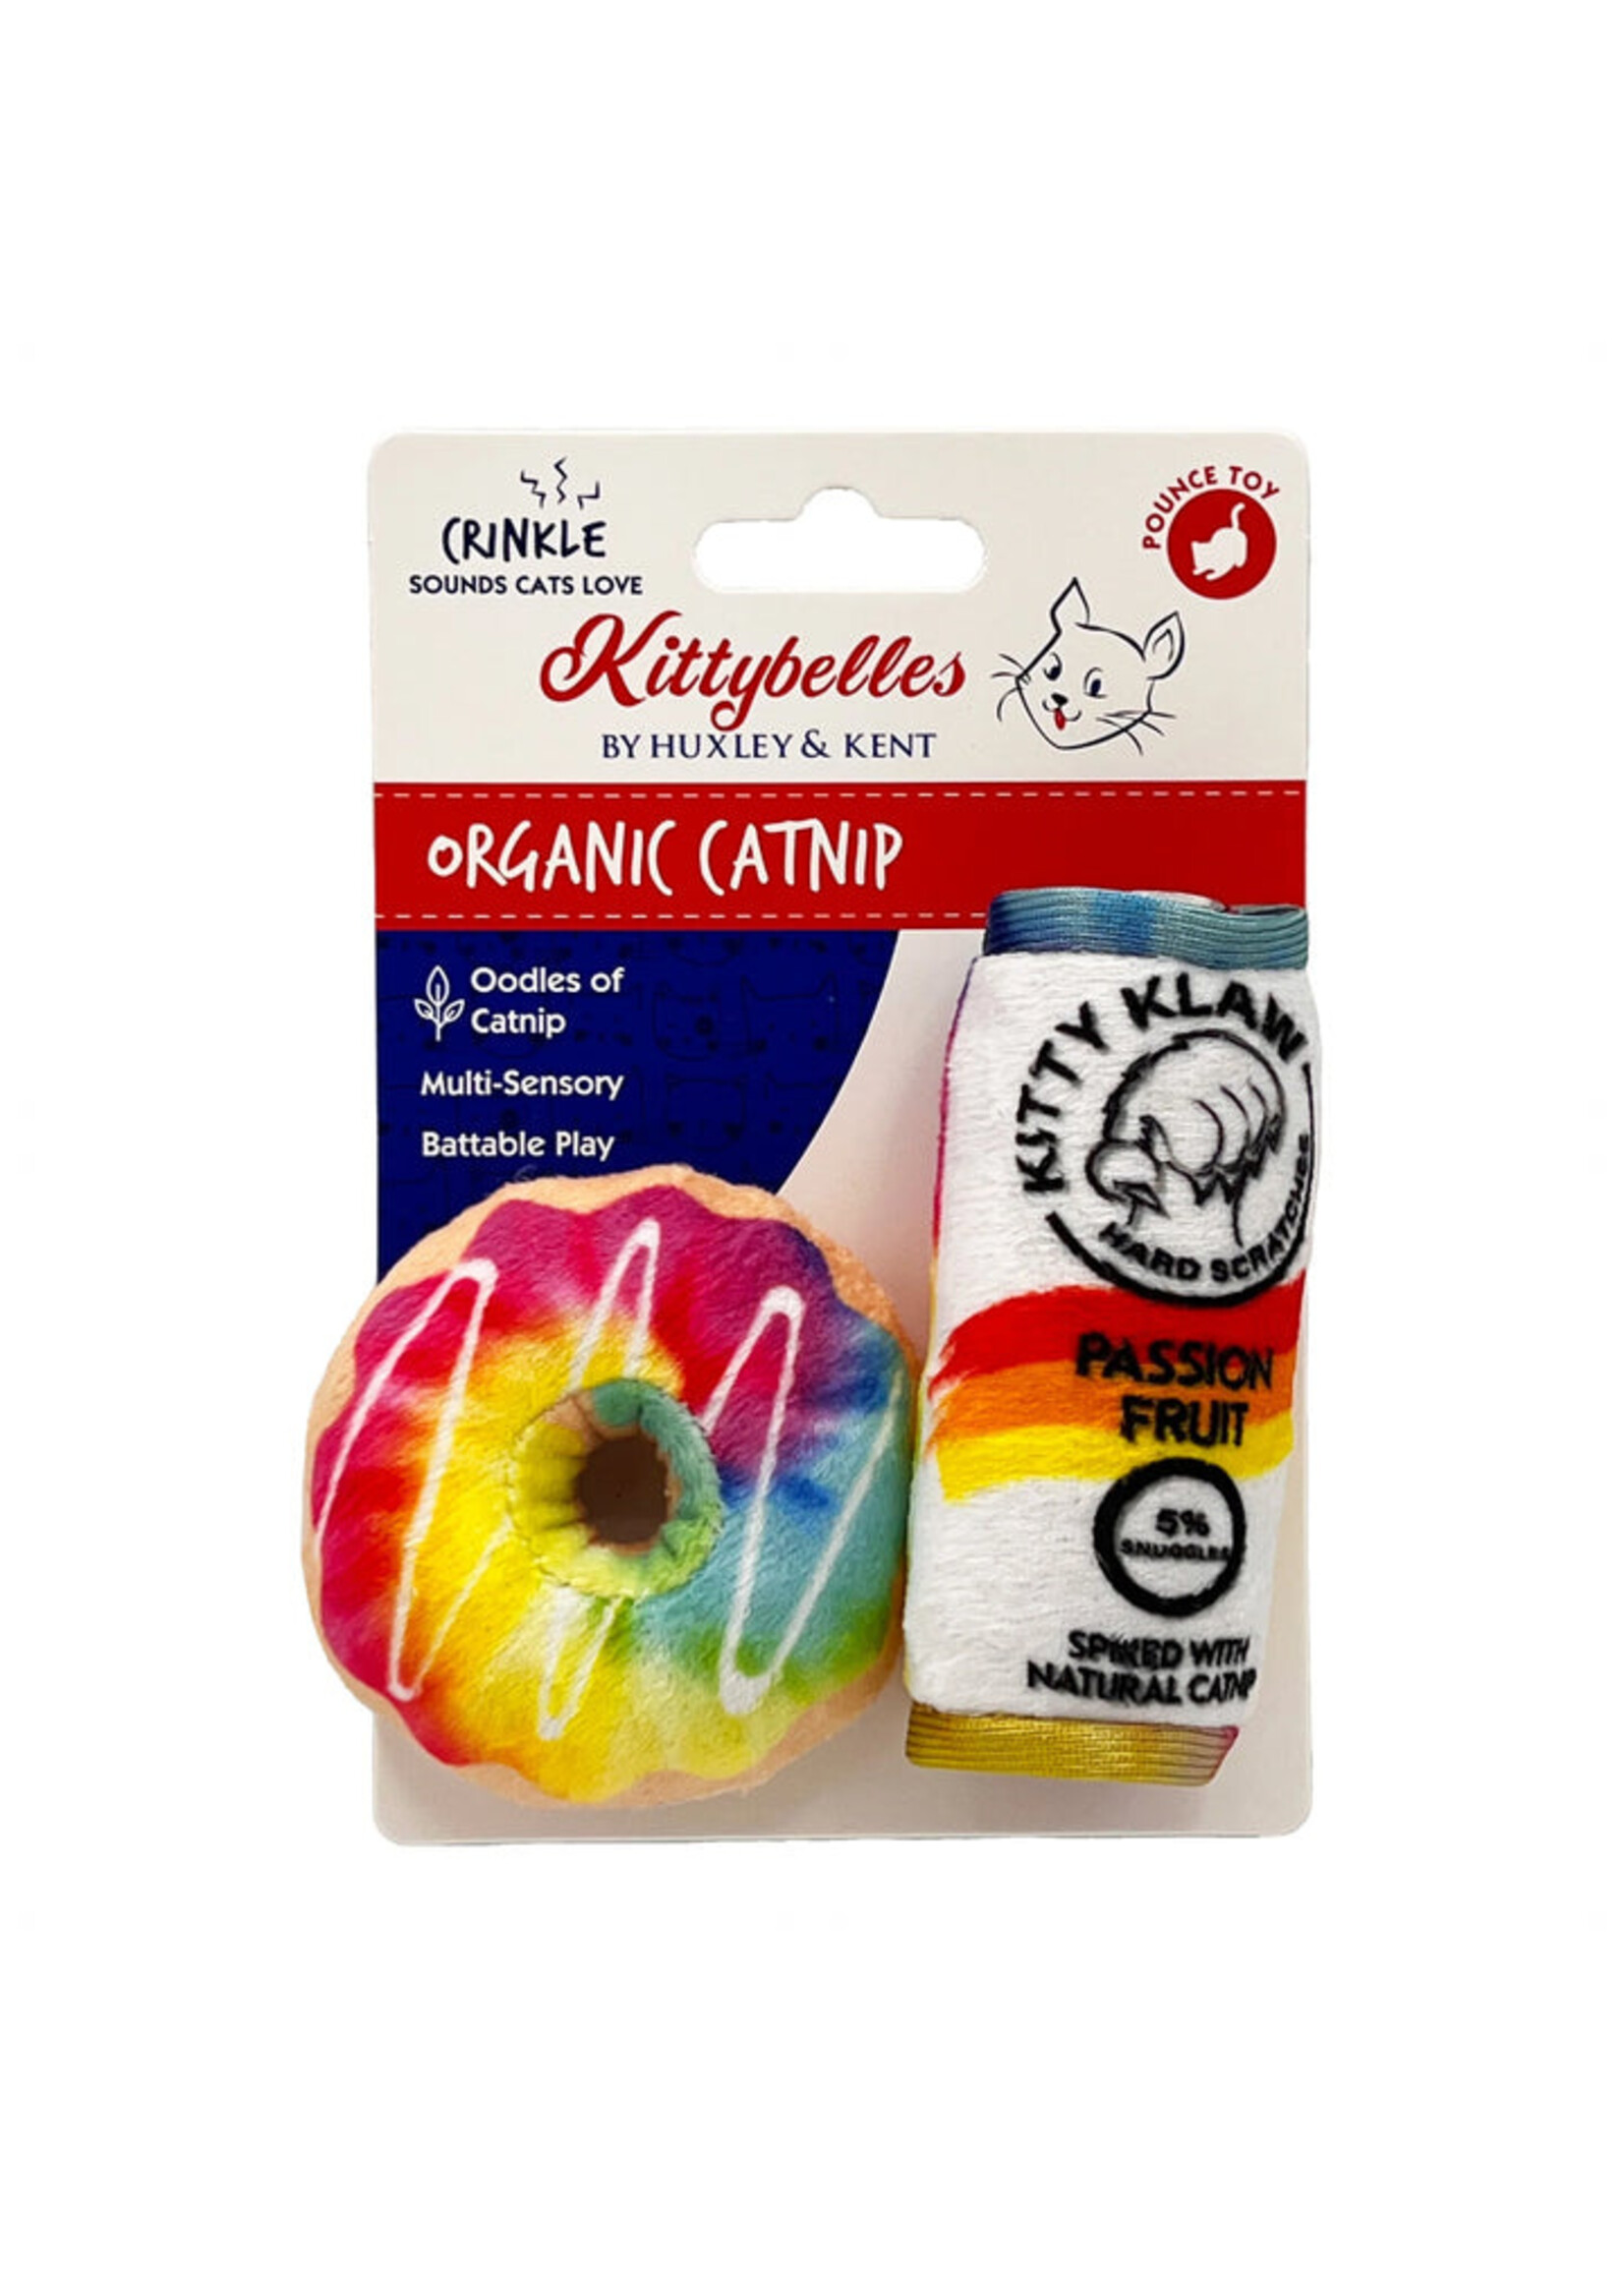 Huxley & Kent Kittybelles Donut & Kitty Klaw Organic Catnip Toy 2pack